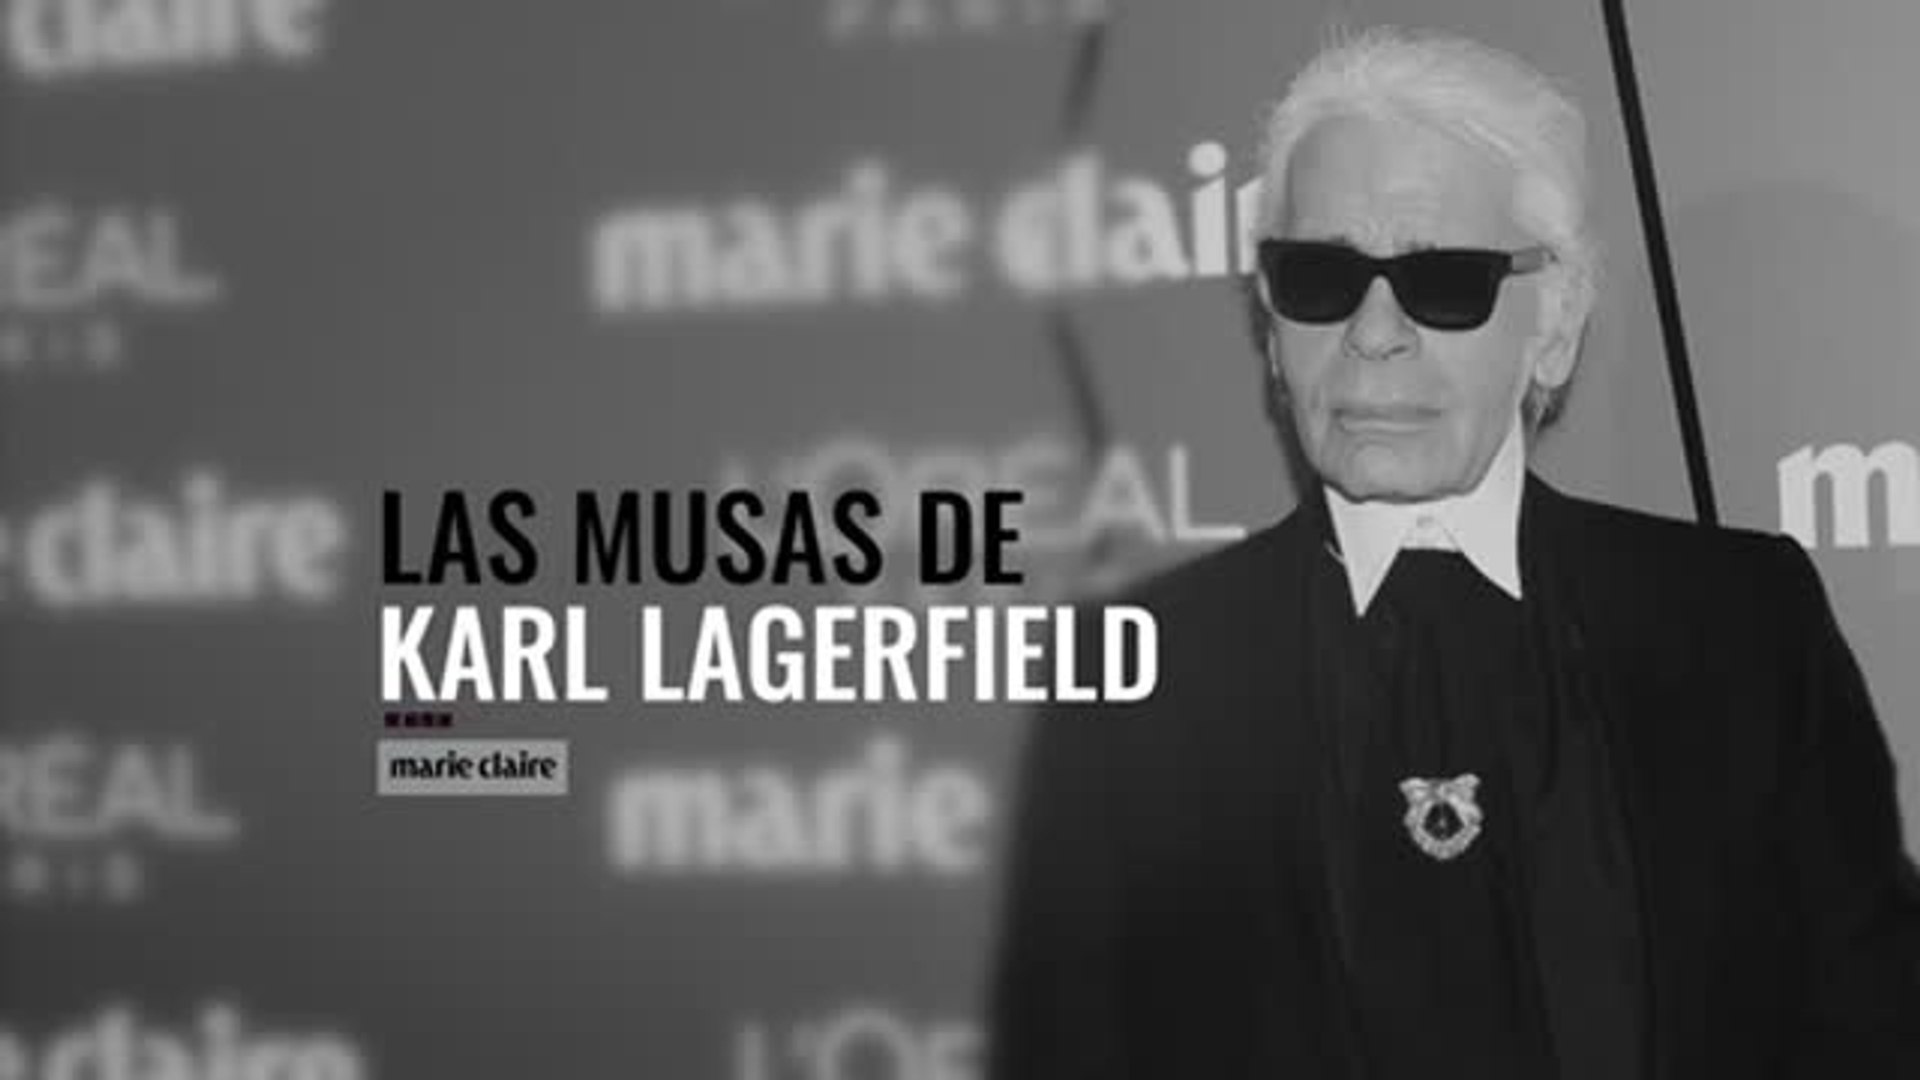 Las musas de Karl Lagerfeld